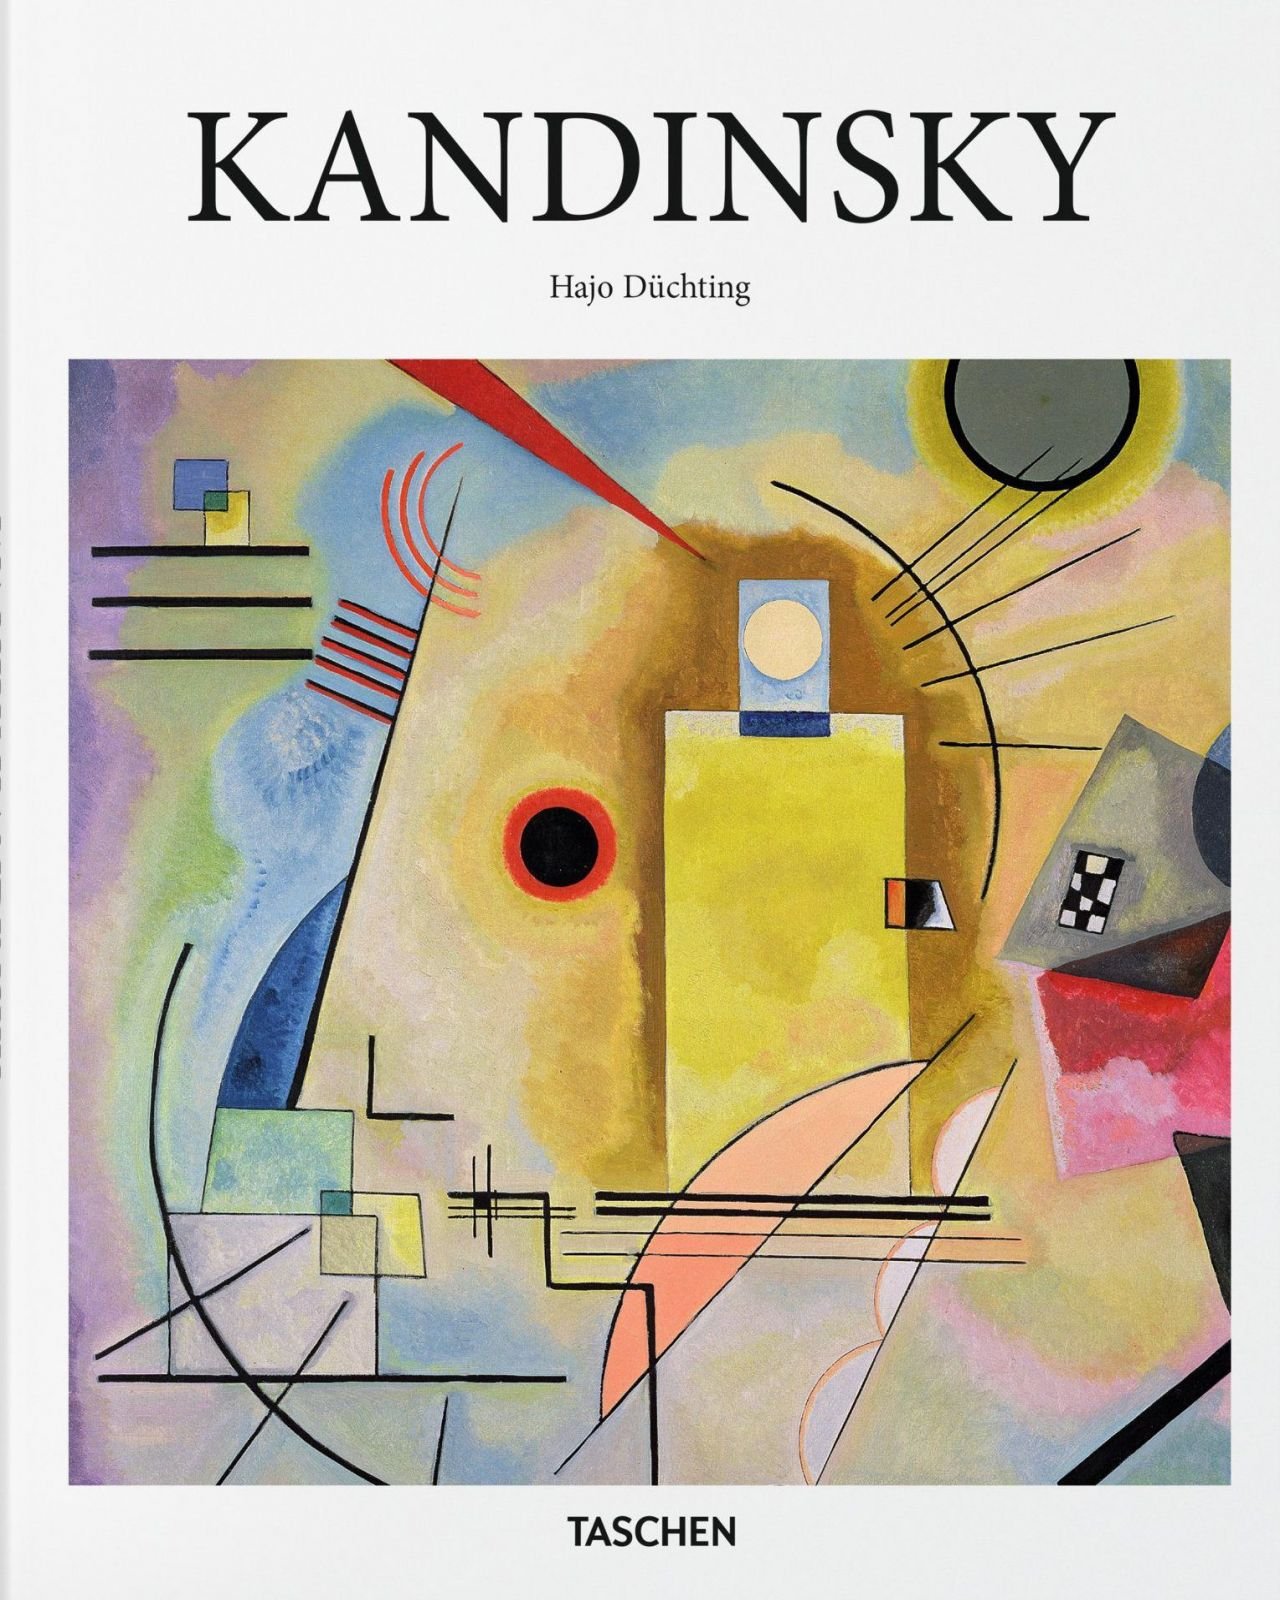 Kandinsky - Basic Art Series